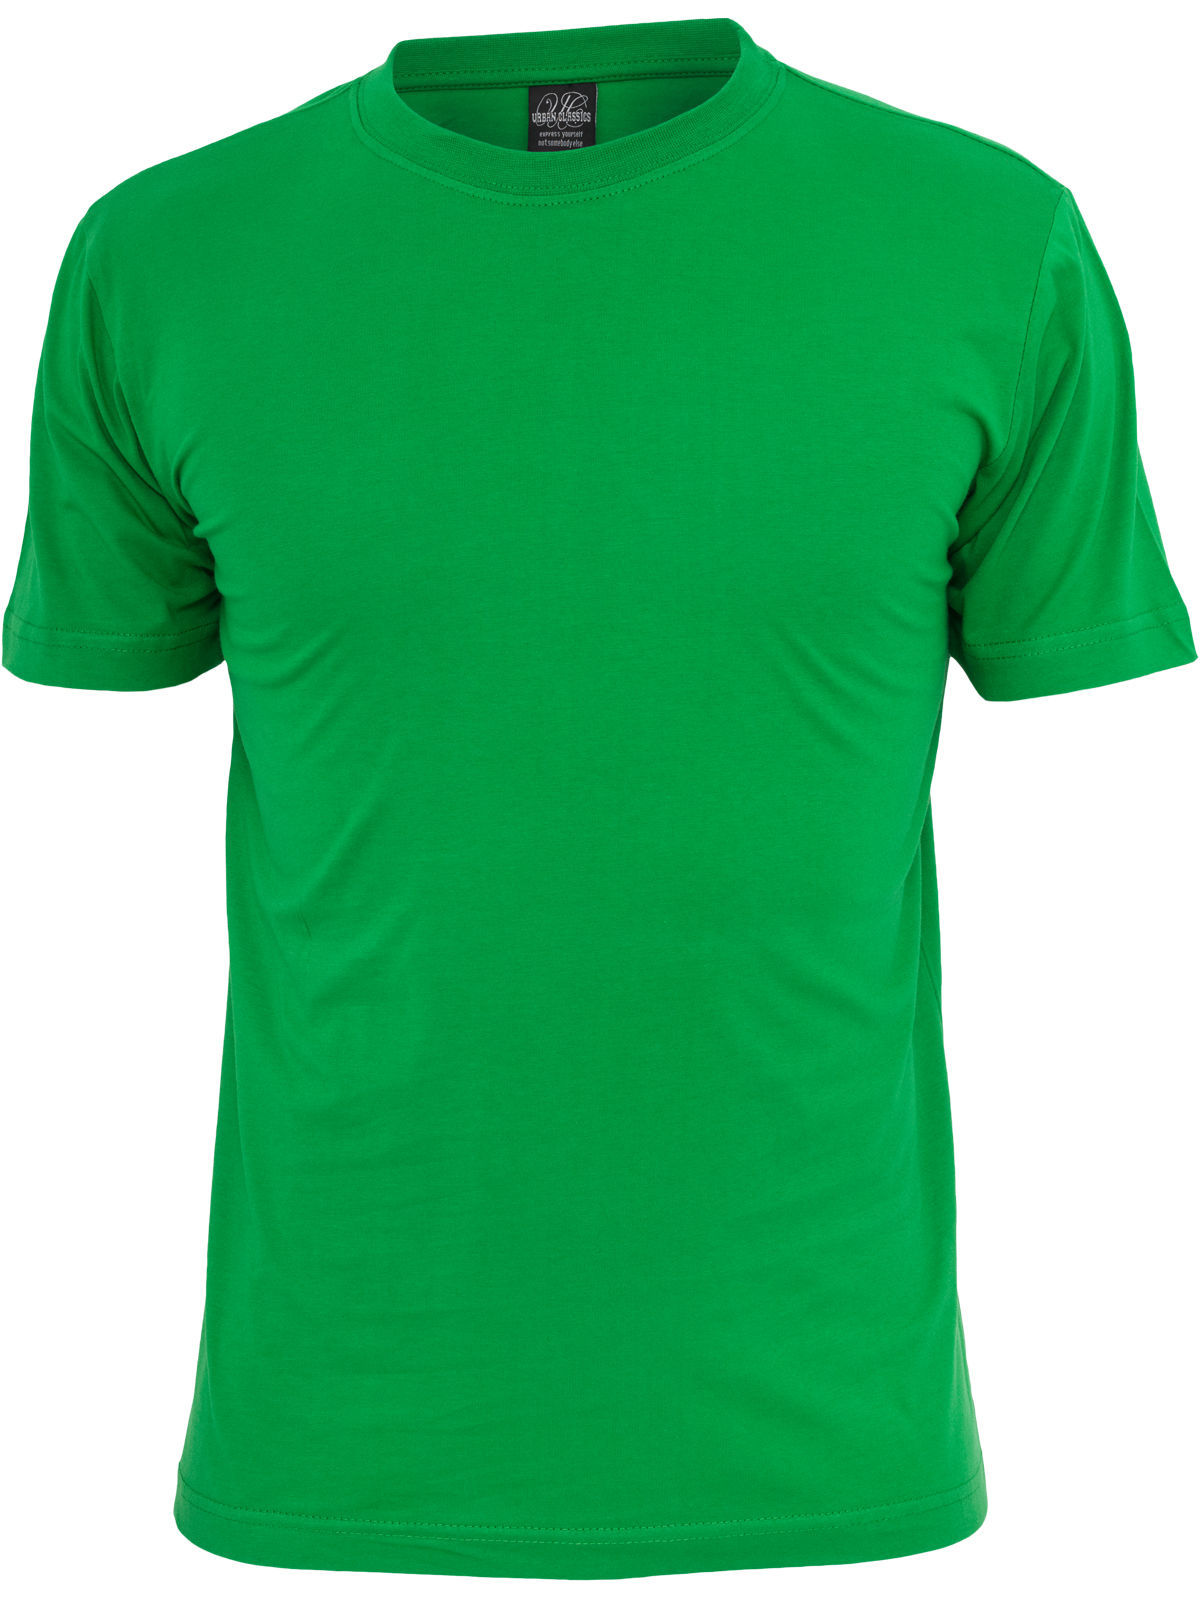 Green T-Shirt | Petsitter University